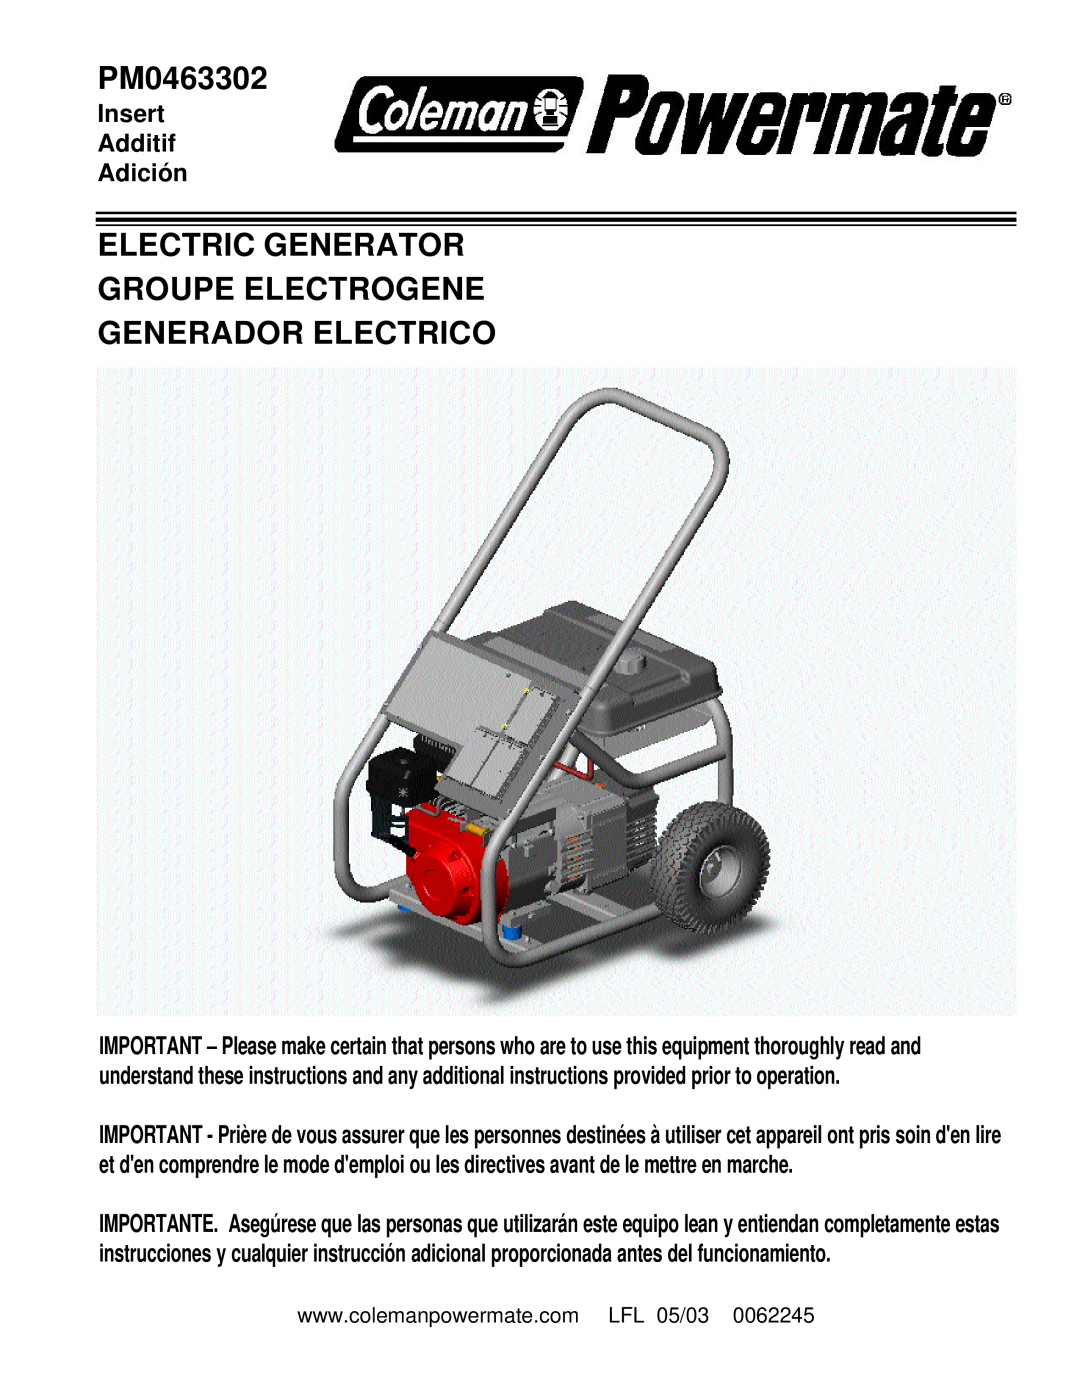 Powermate PM0463302 manual Electric Generator Groupe Electrogene, Generador Electrico, Insert Additif Adición 